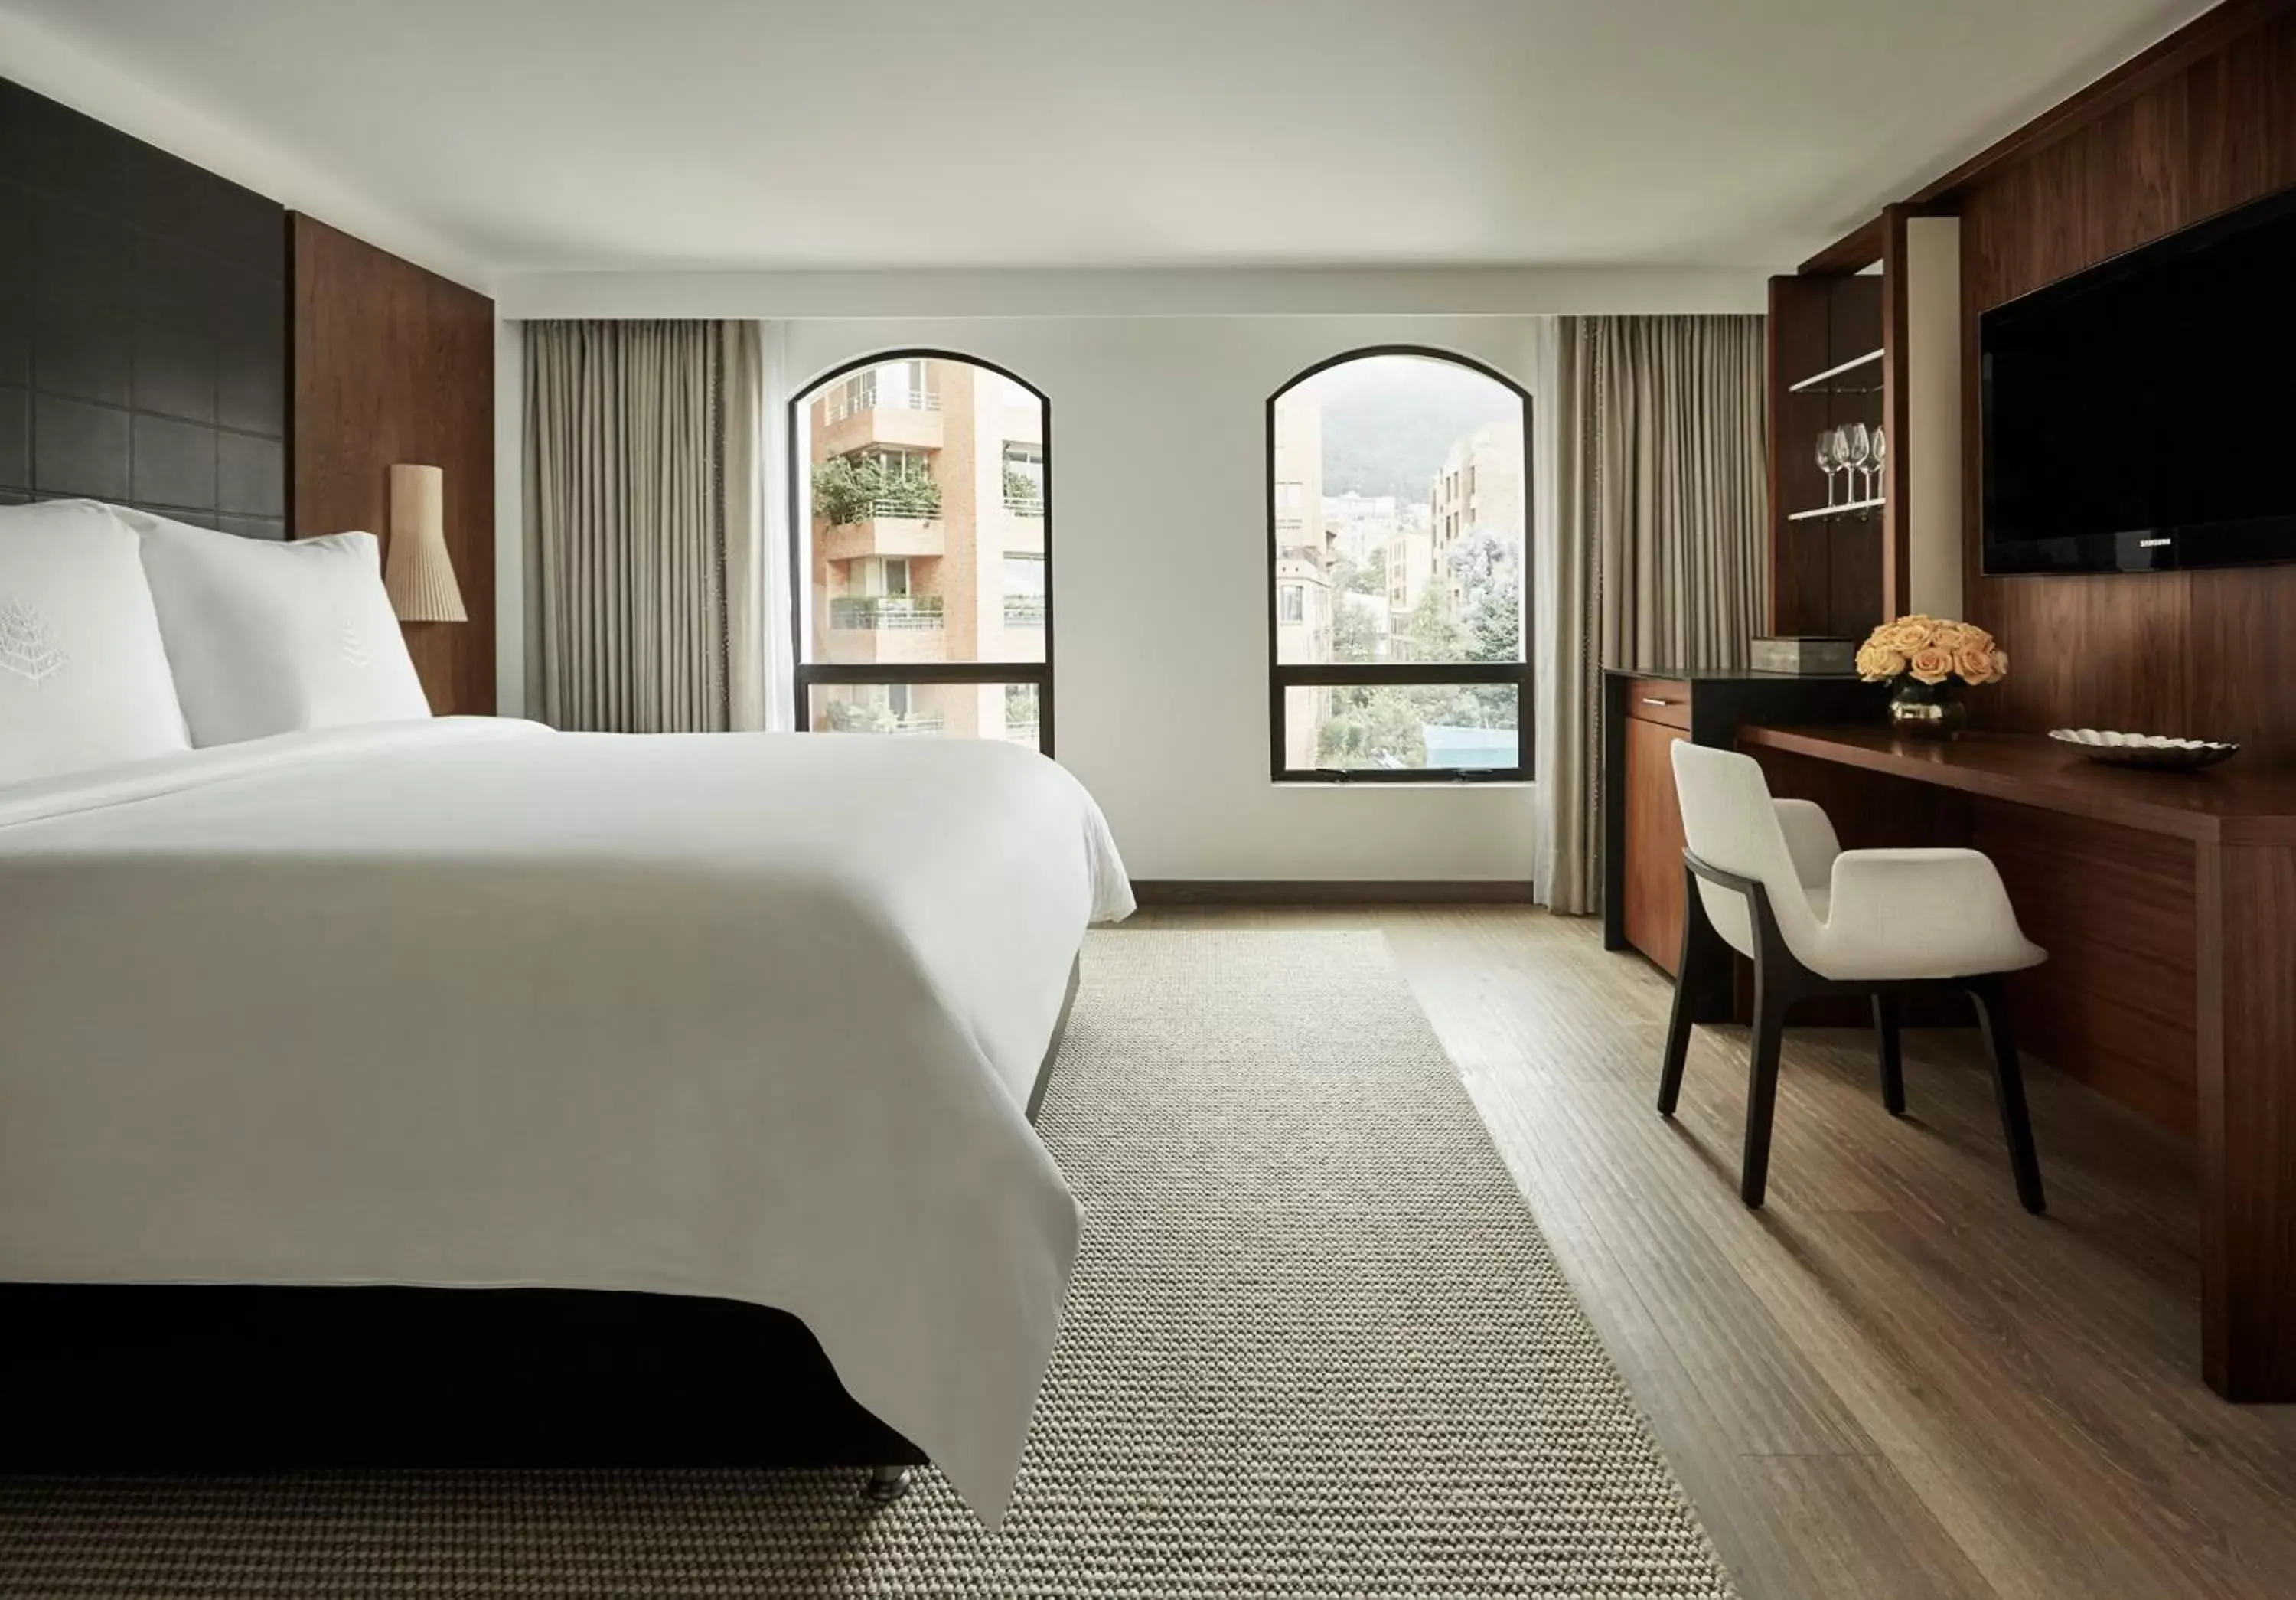 Bedroom, Room Photo in Four Seasons Hotel Bogota